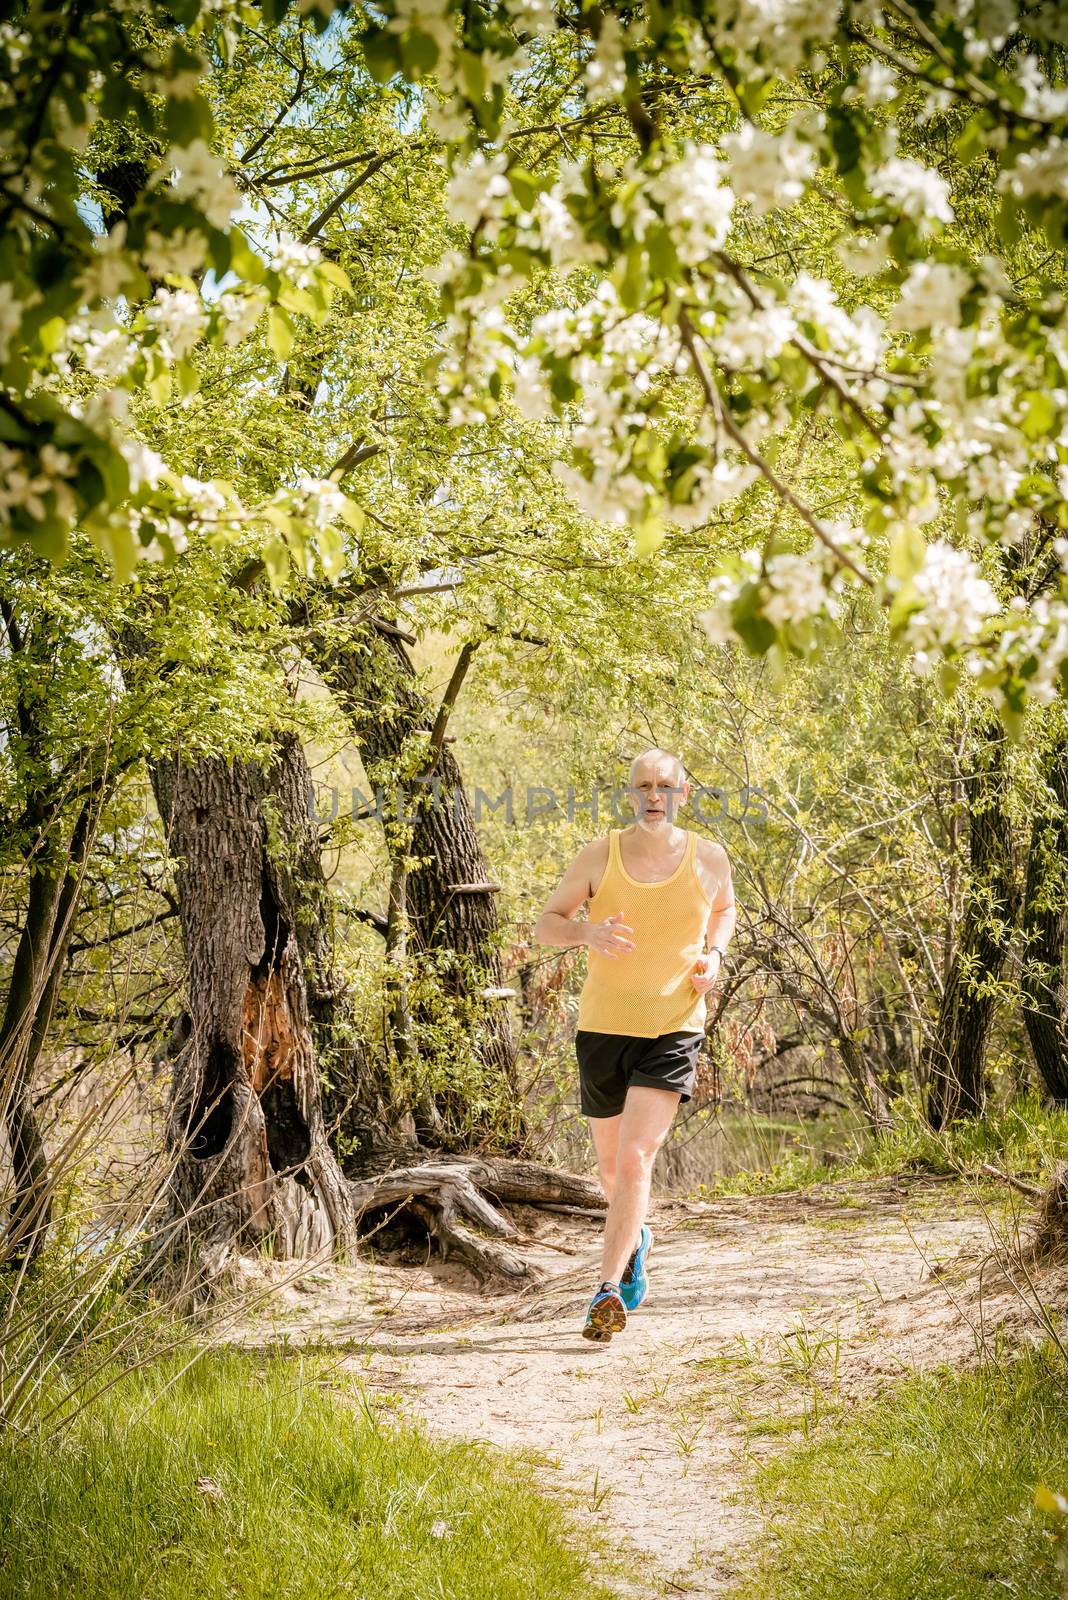 Senior Man Running in the Forest by MaxalTamor